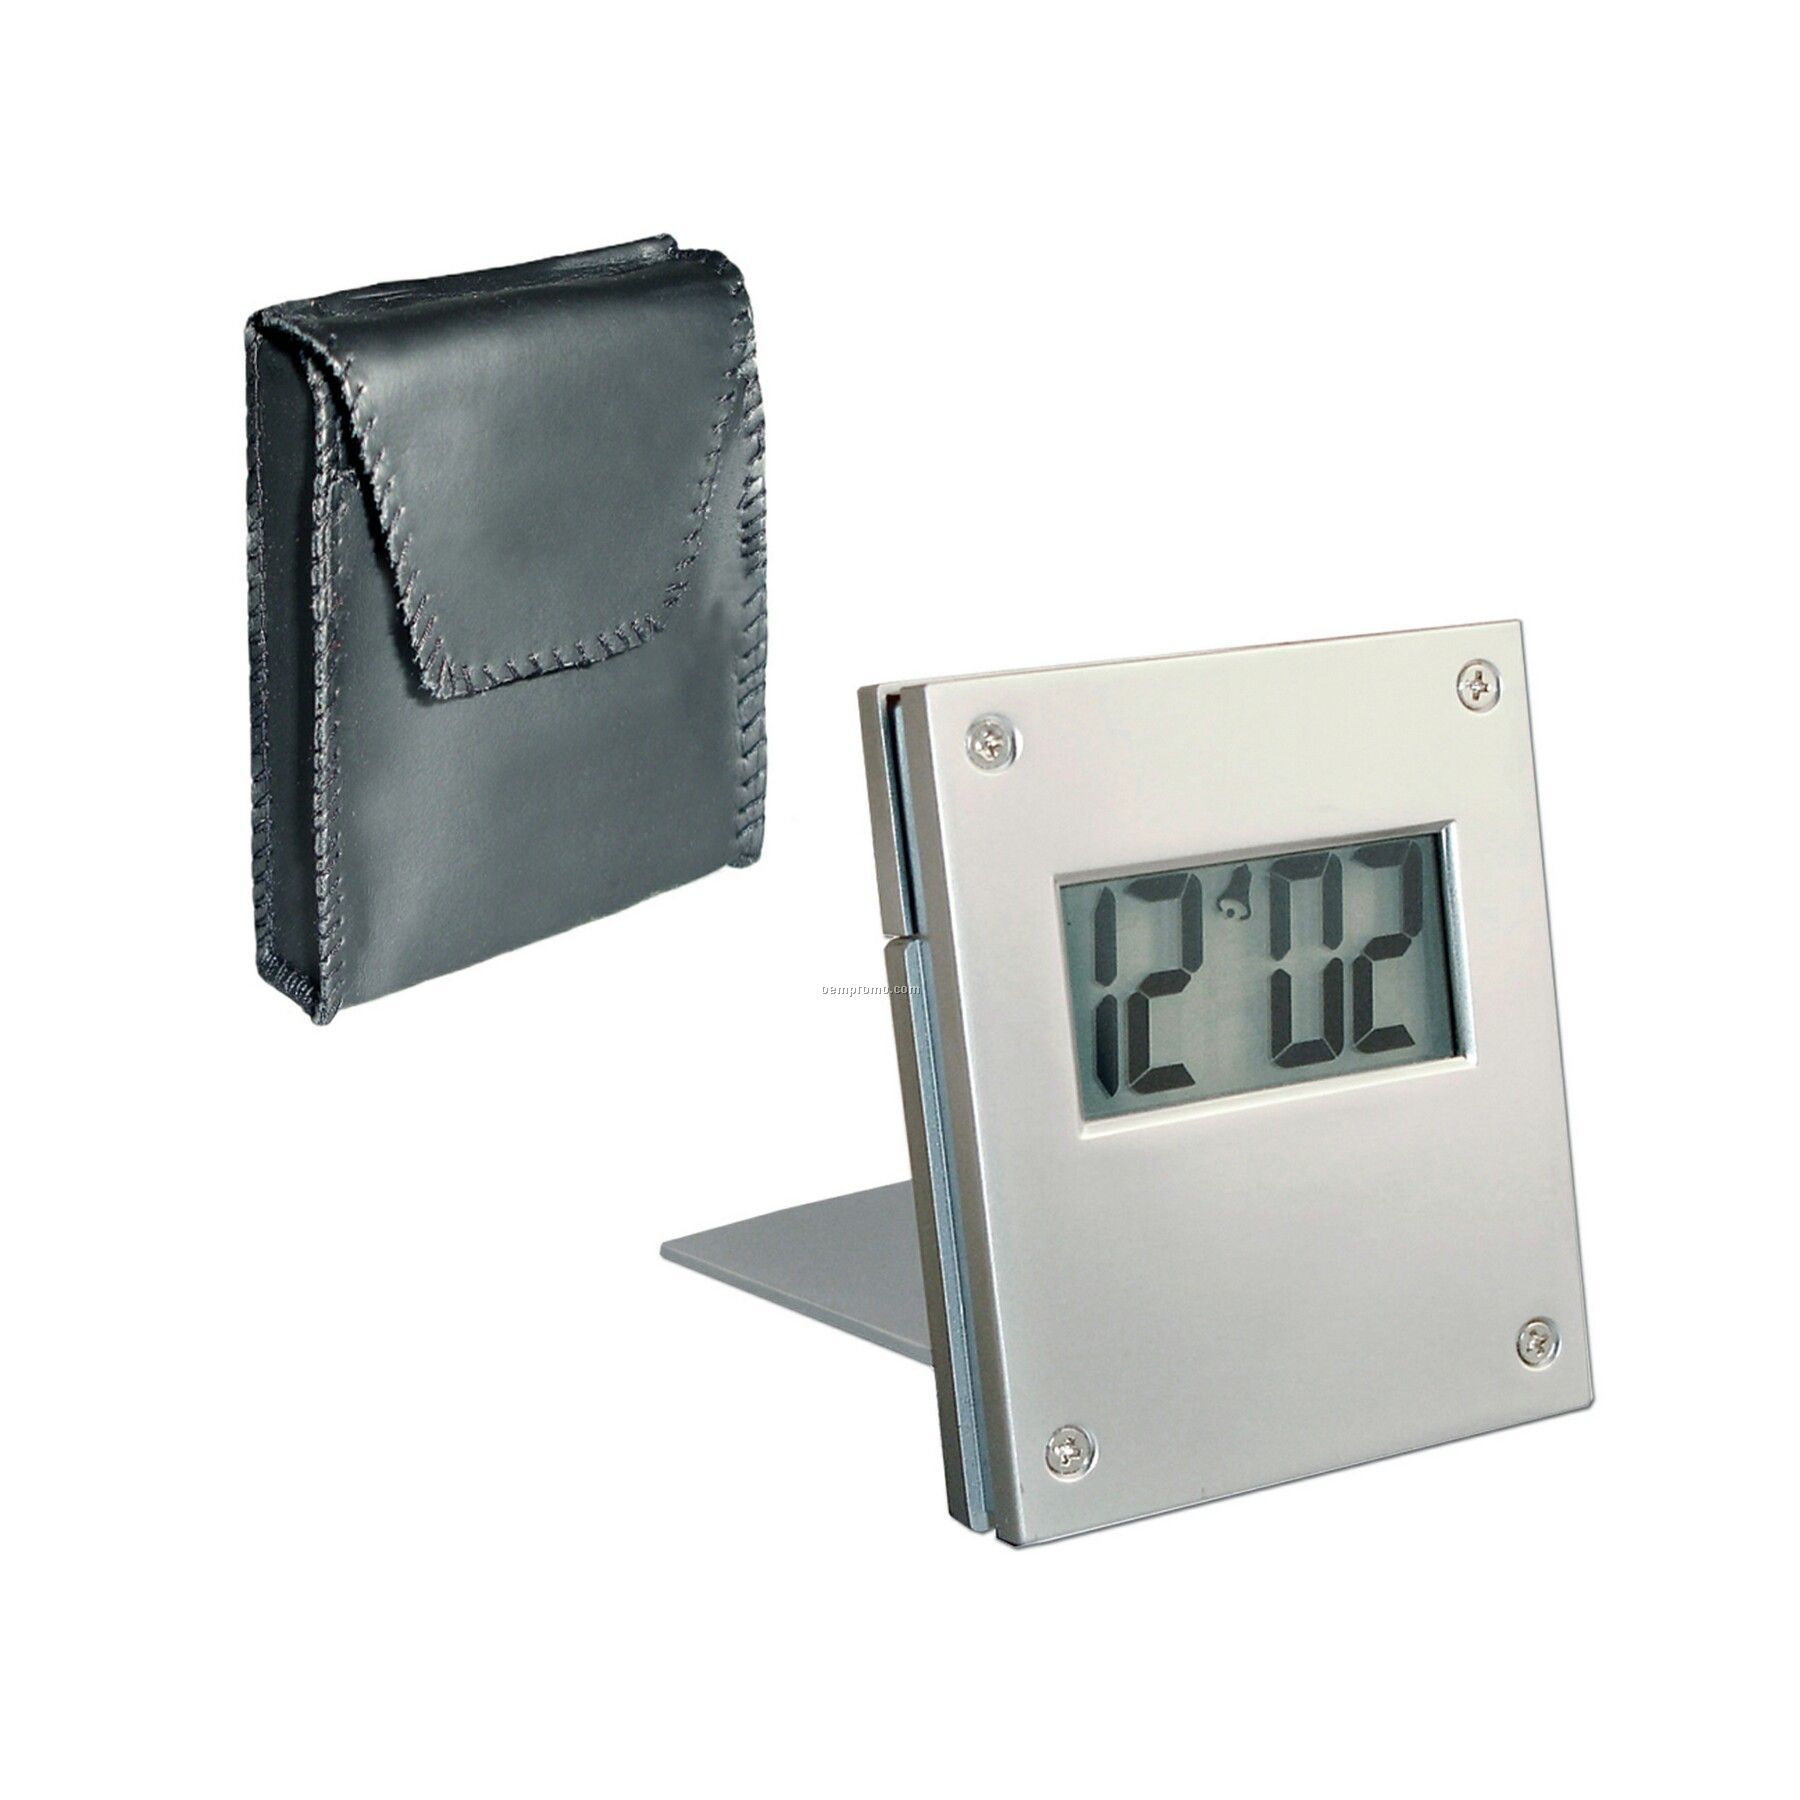 Brushed Aluminum Folding Alarm Clock W/ Digital Display